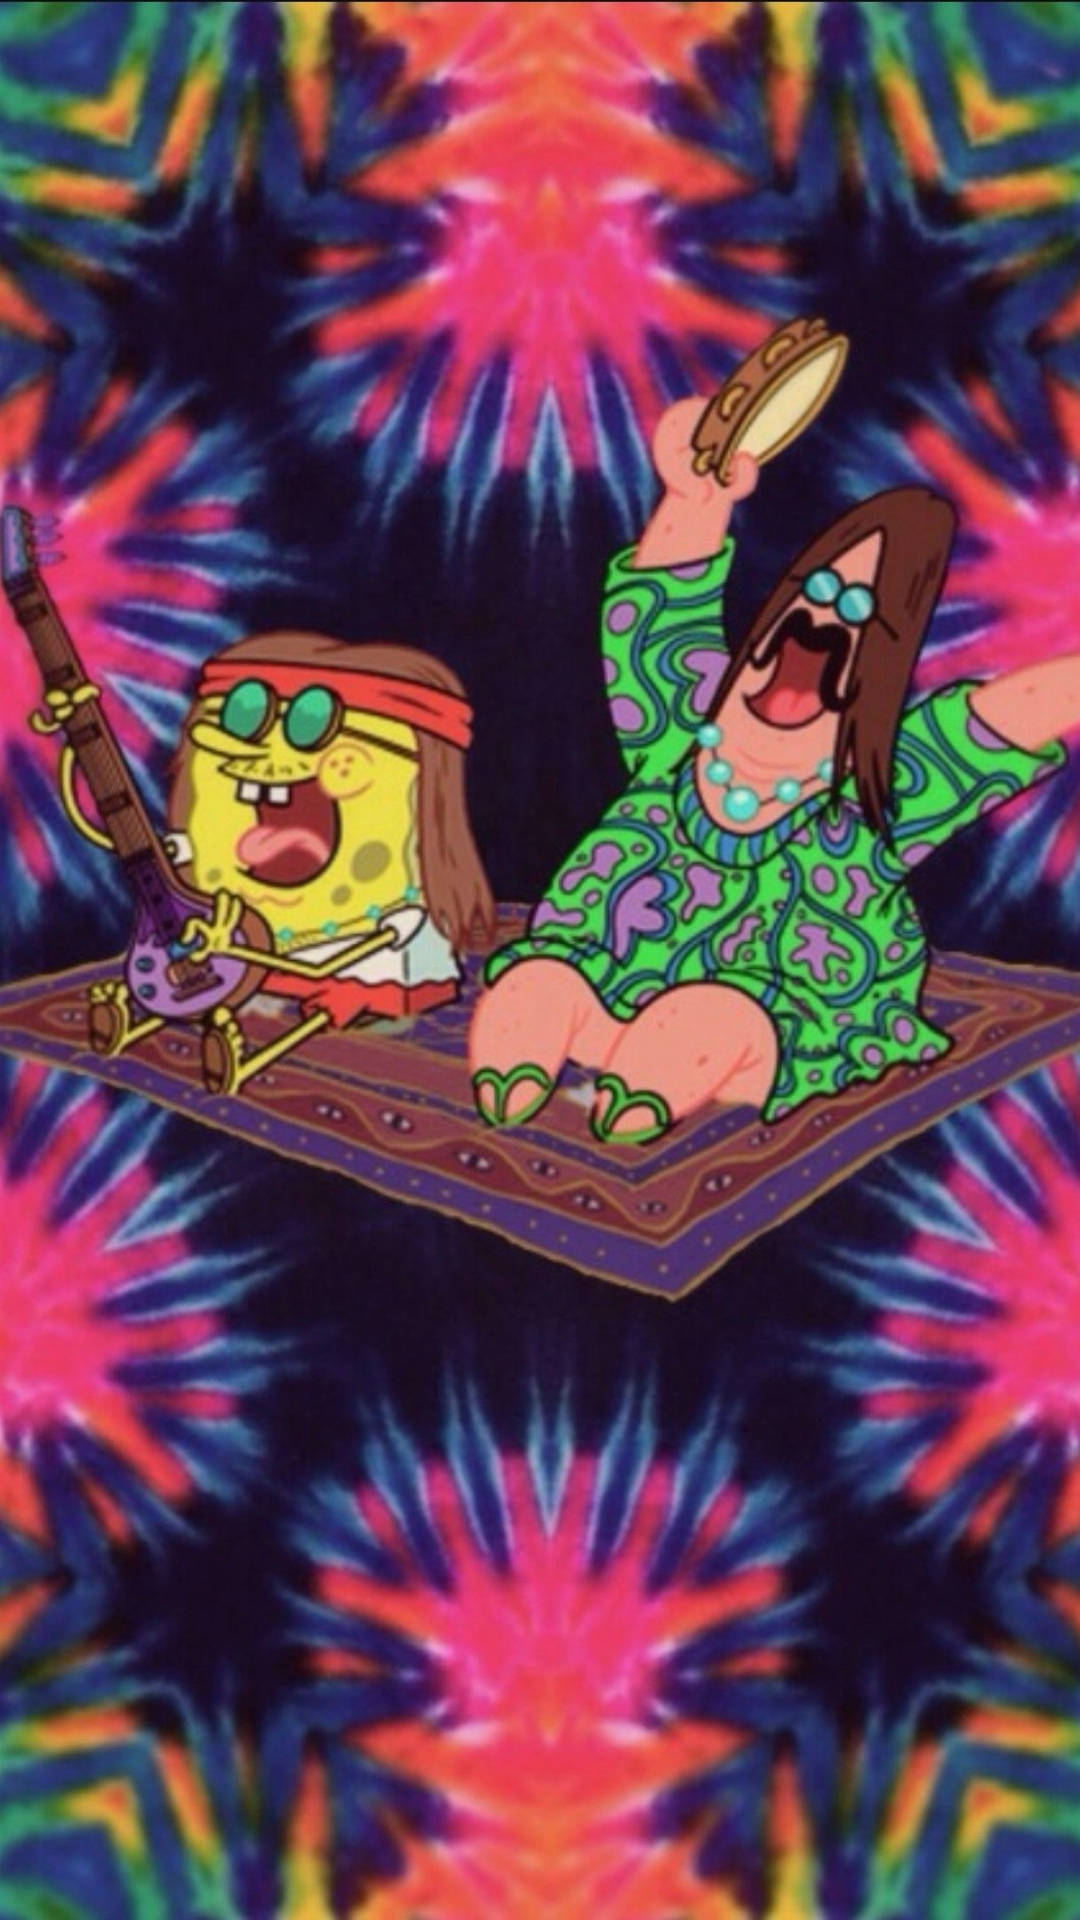 Spongebob Enjoying A Joint On A Hippie Adventure!